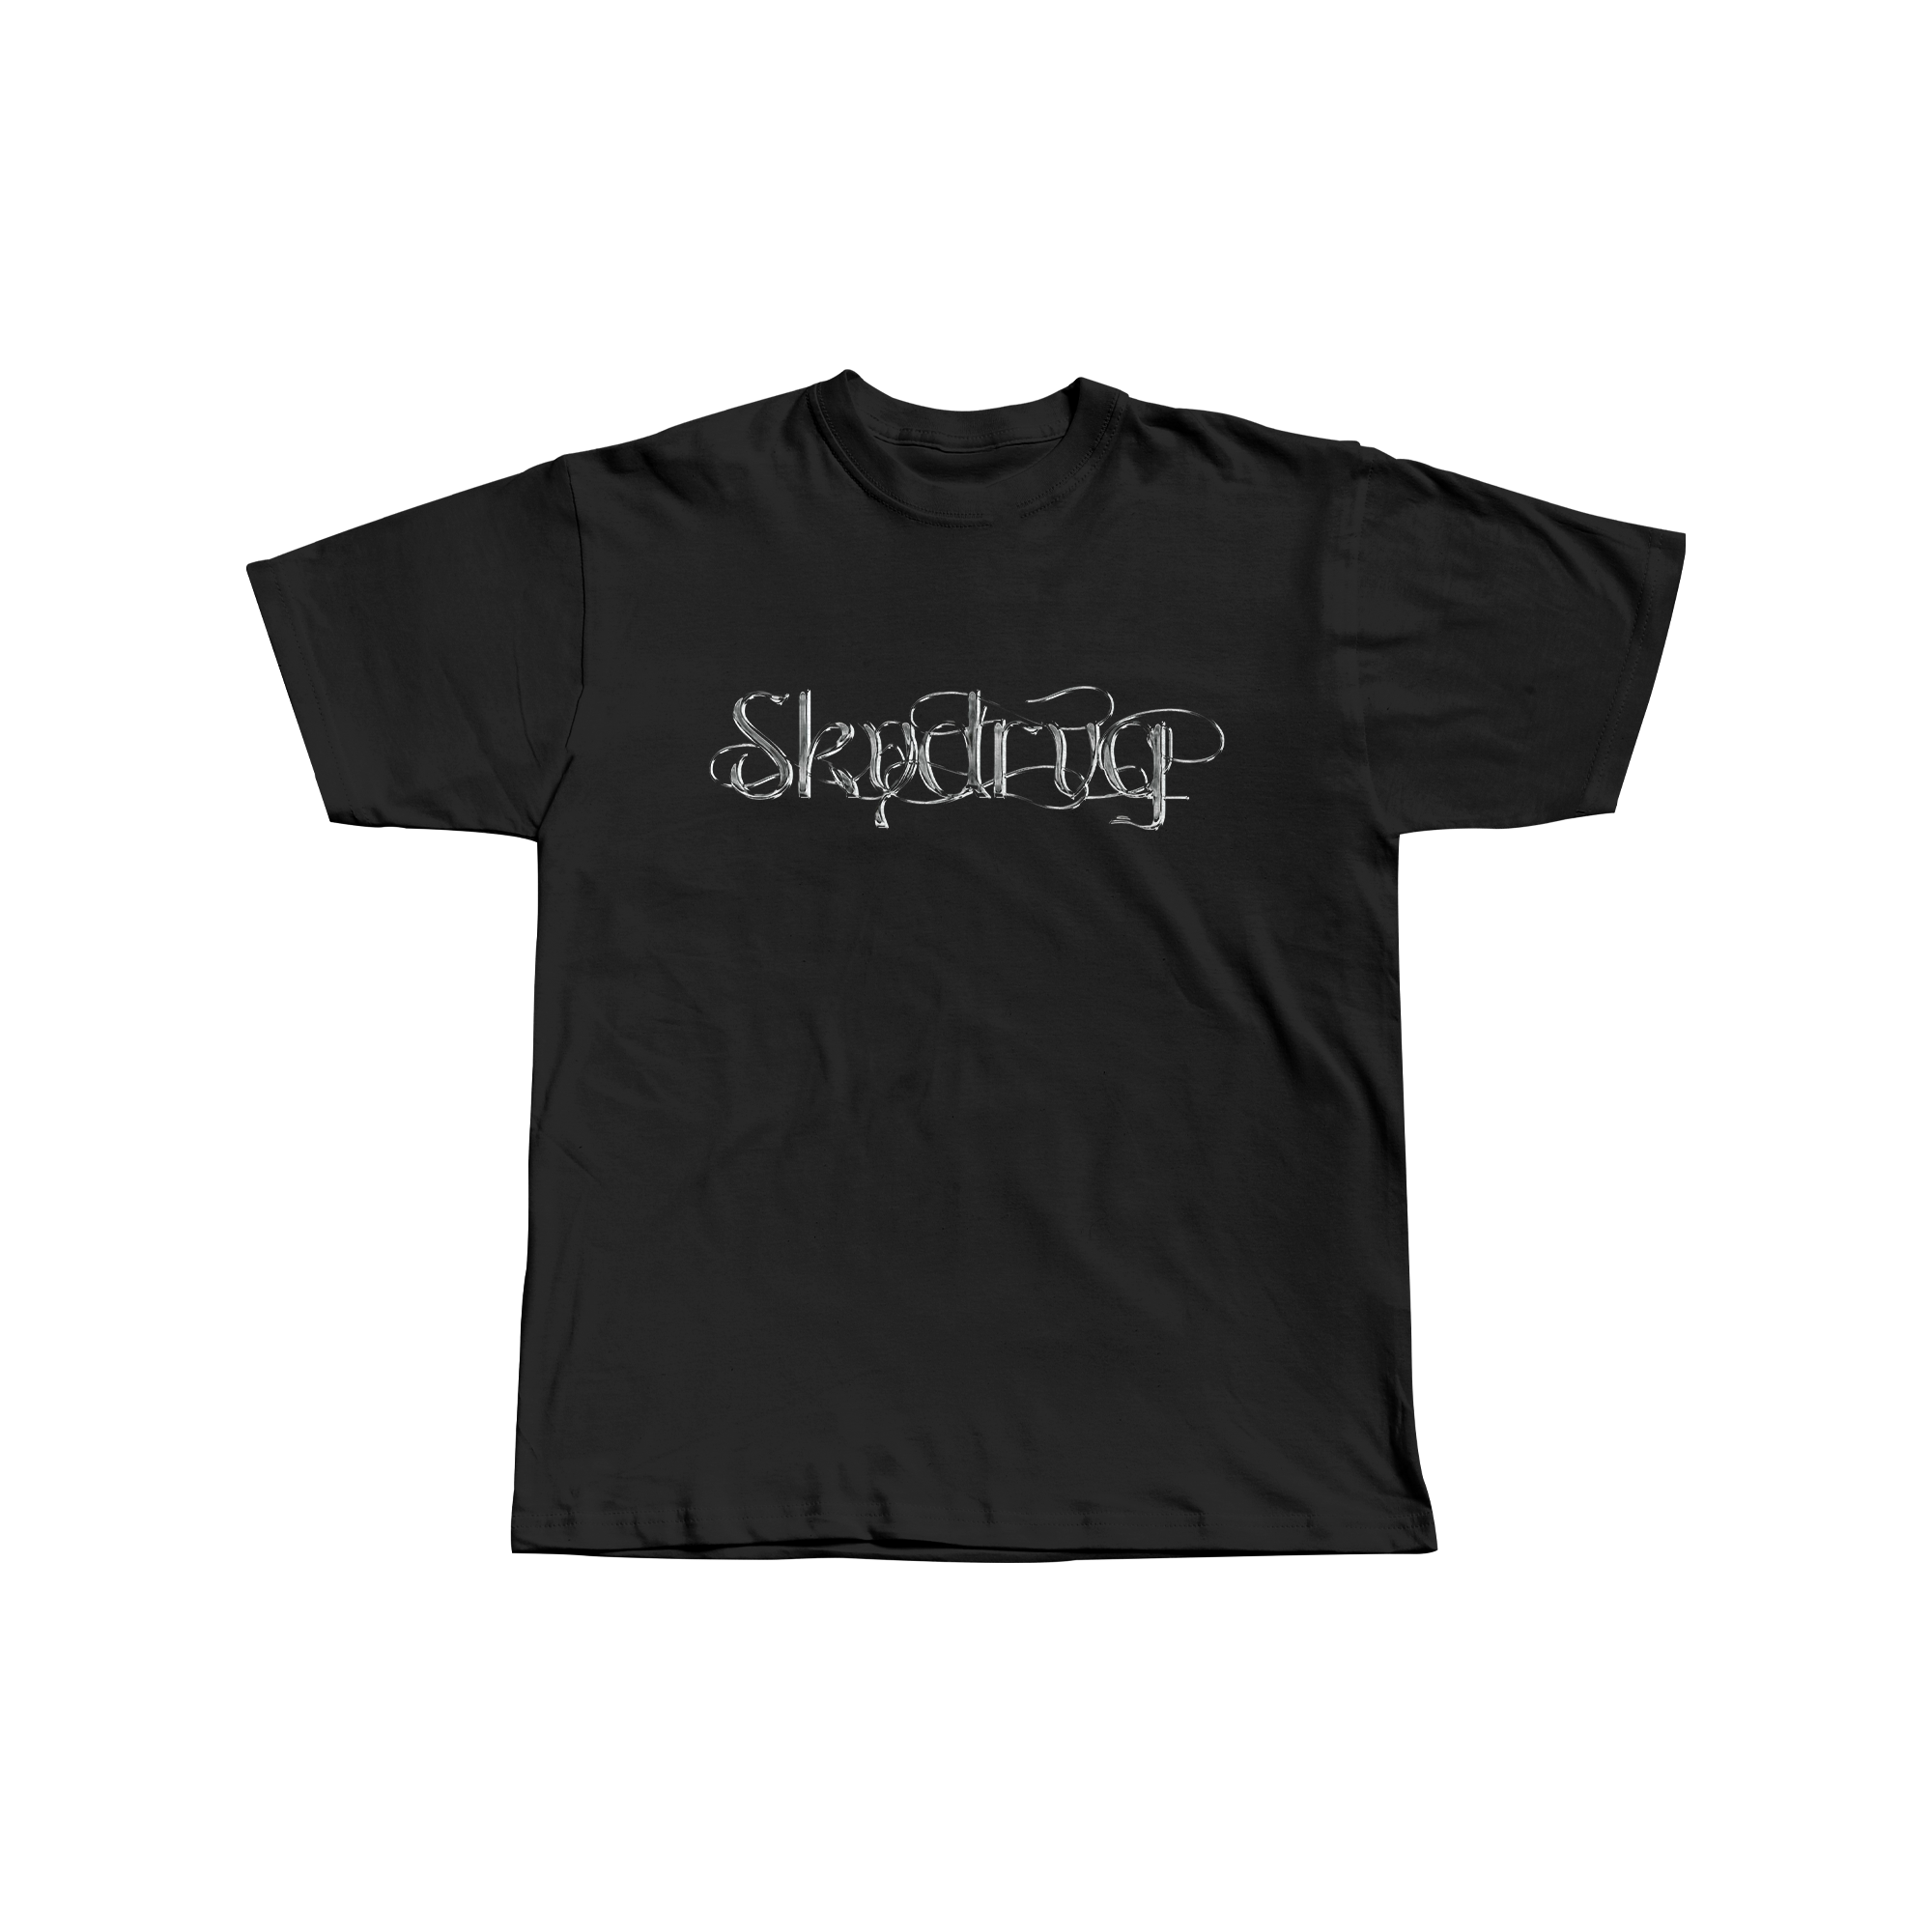 Skydrvg 3.0 (Casa de Brujas) ✶ Camiseta